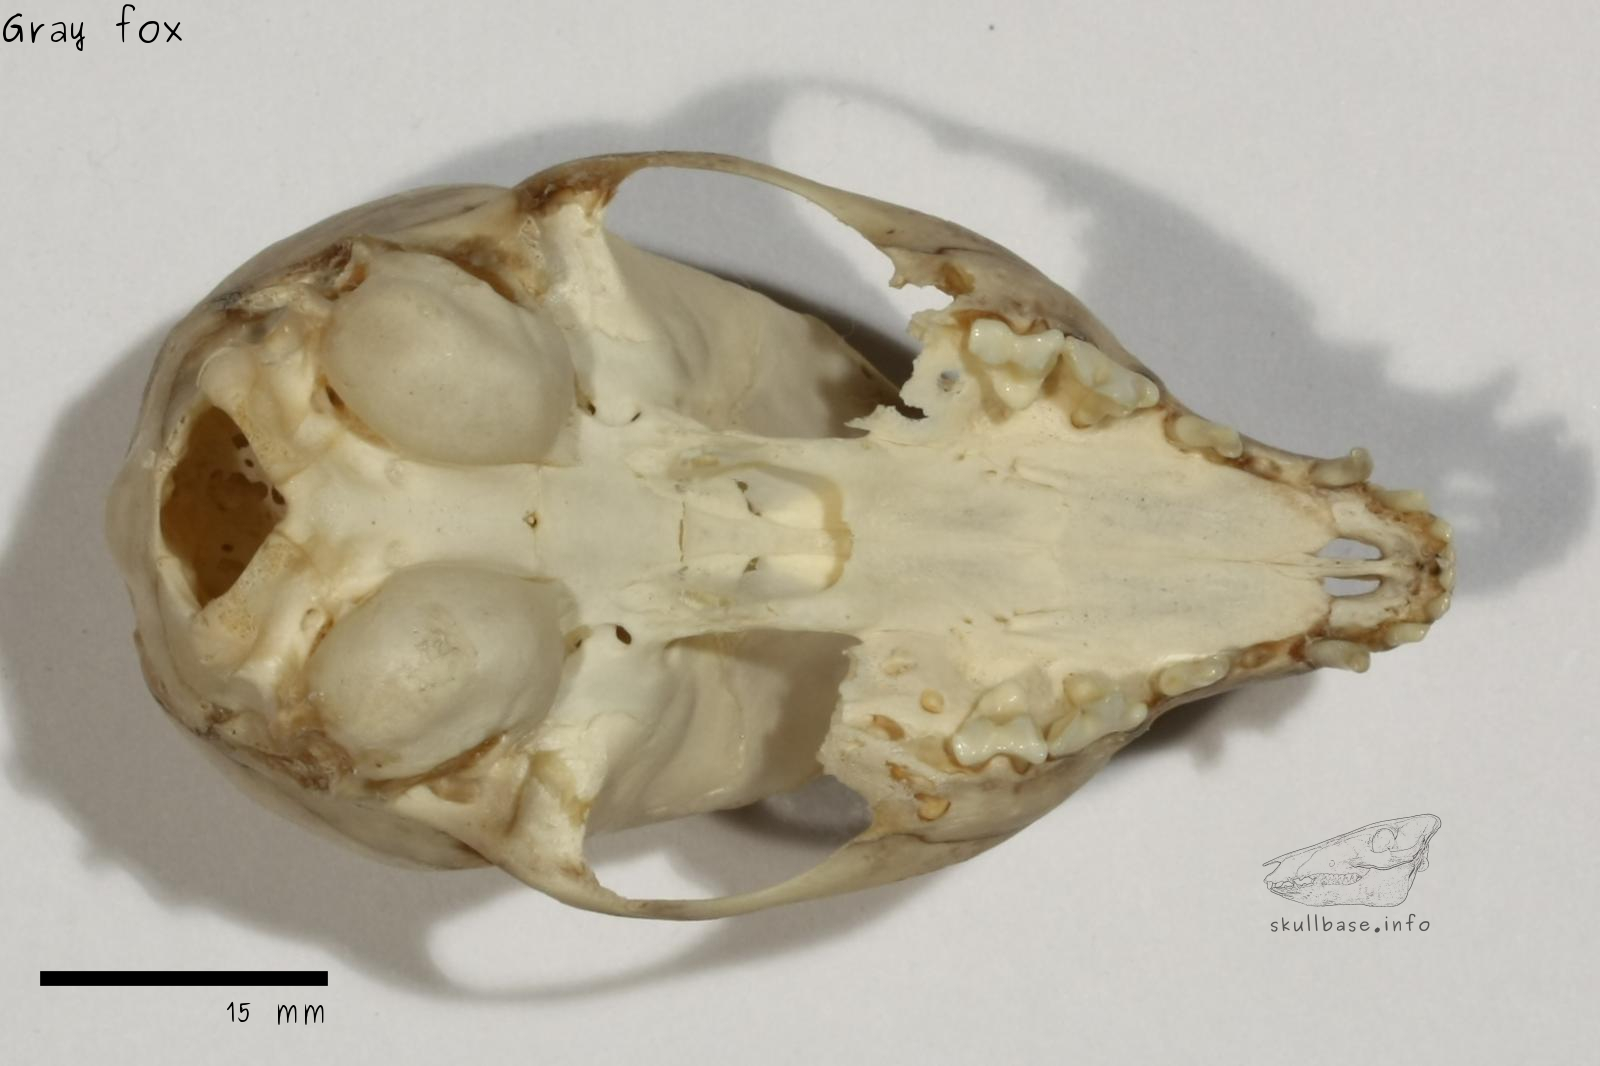 Gray fox (Urocyon cinereoargenteus) skull ventral view